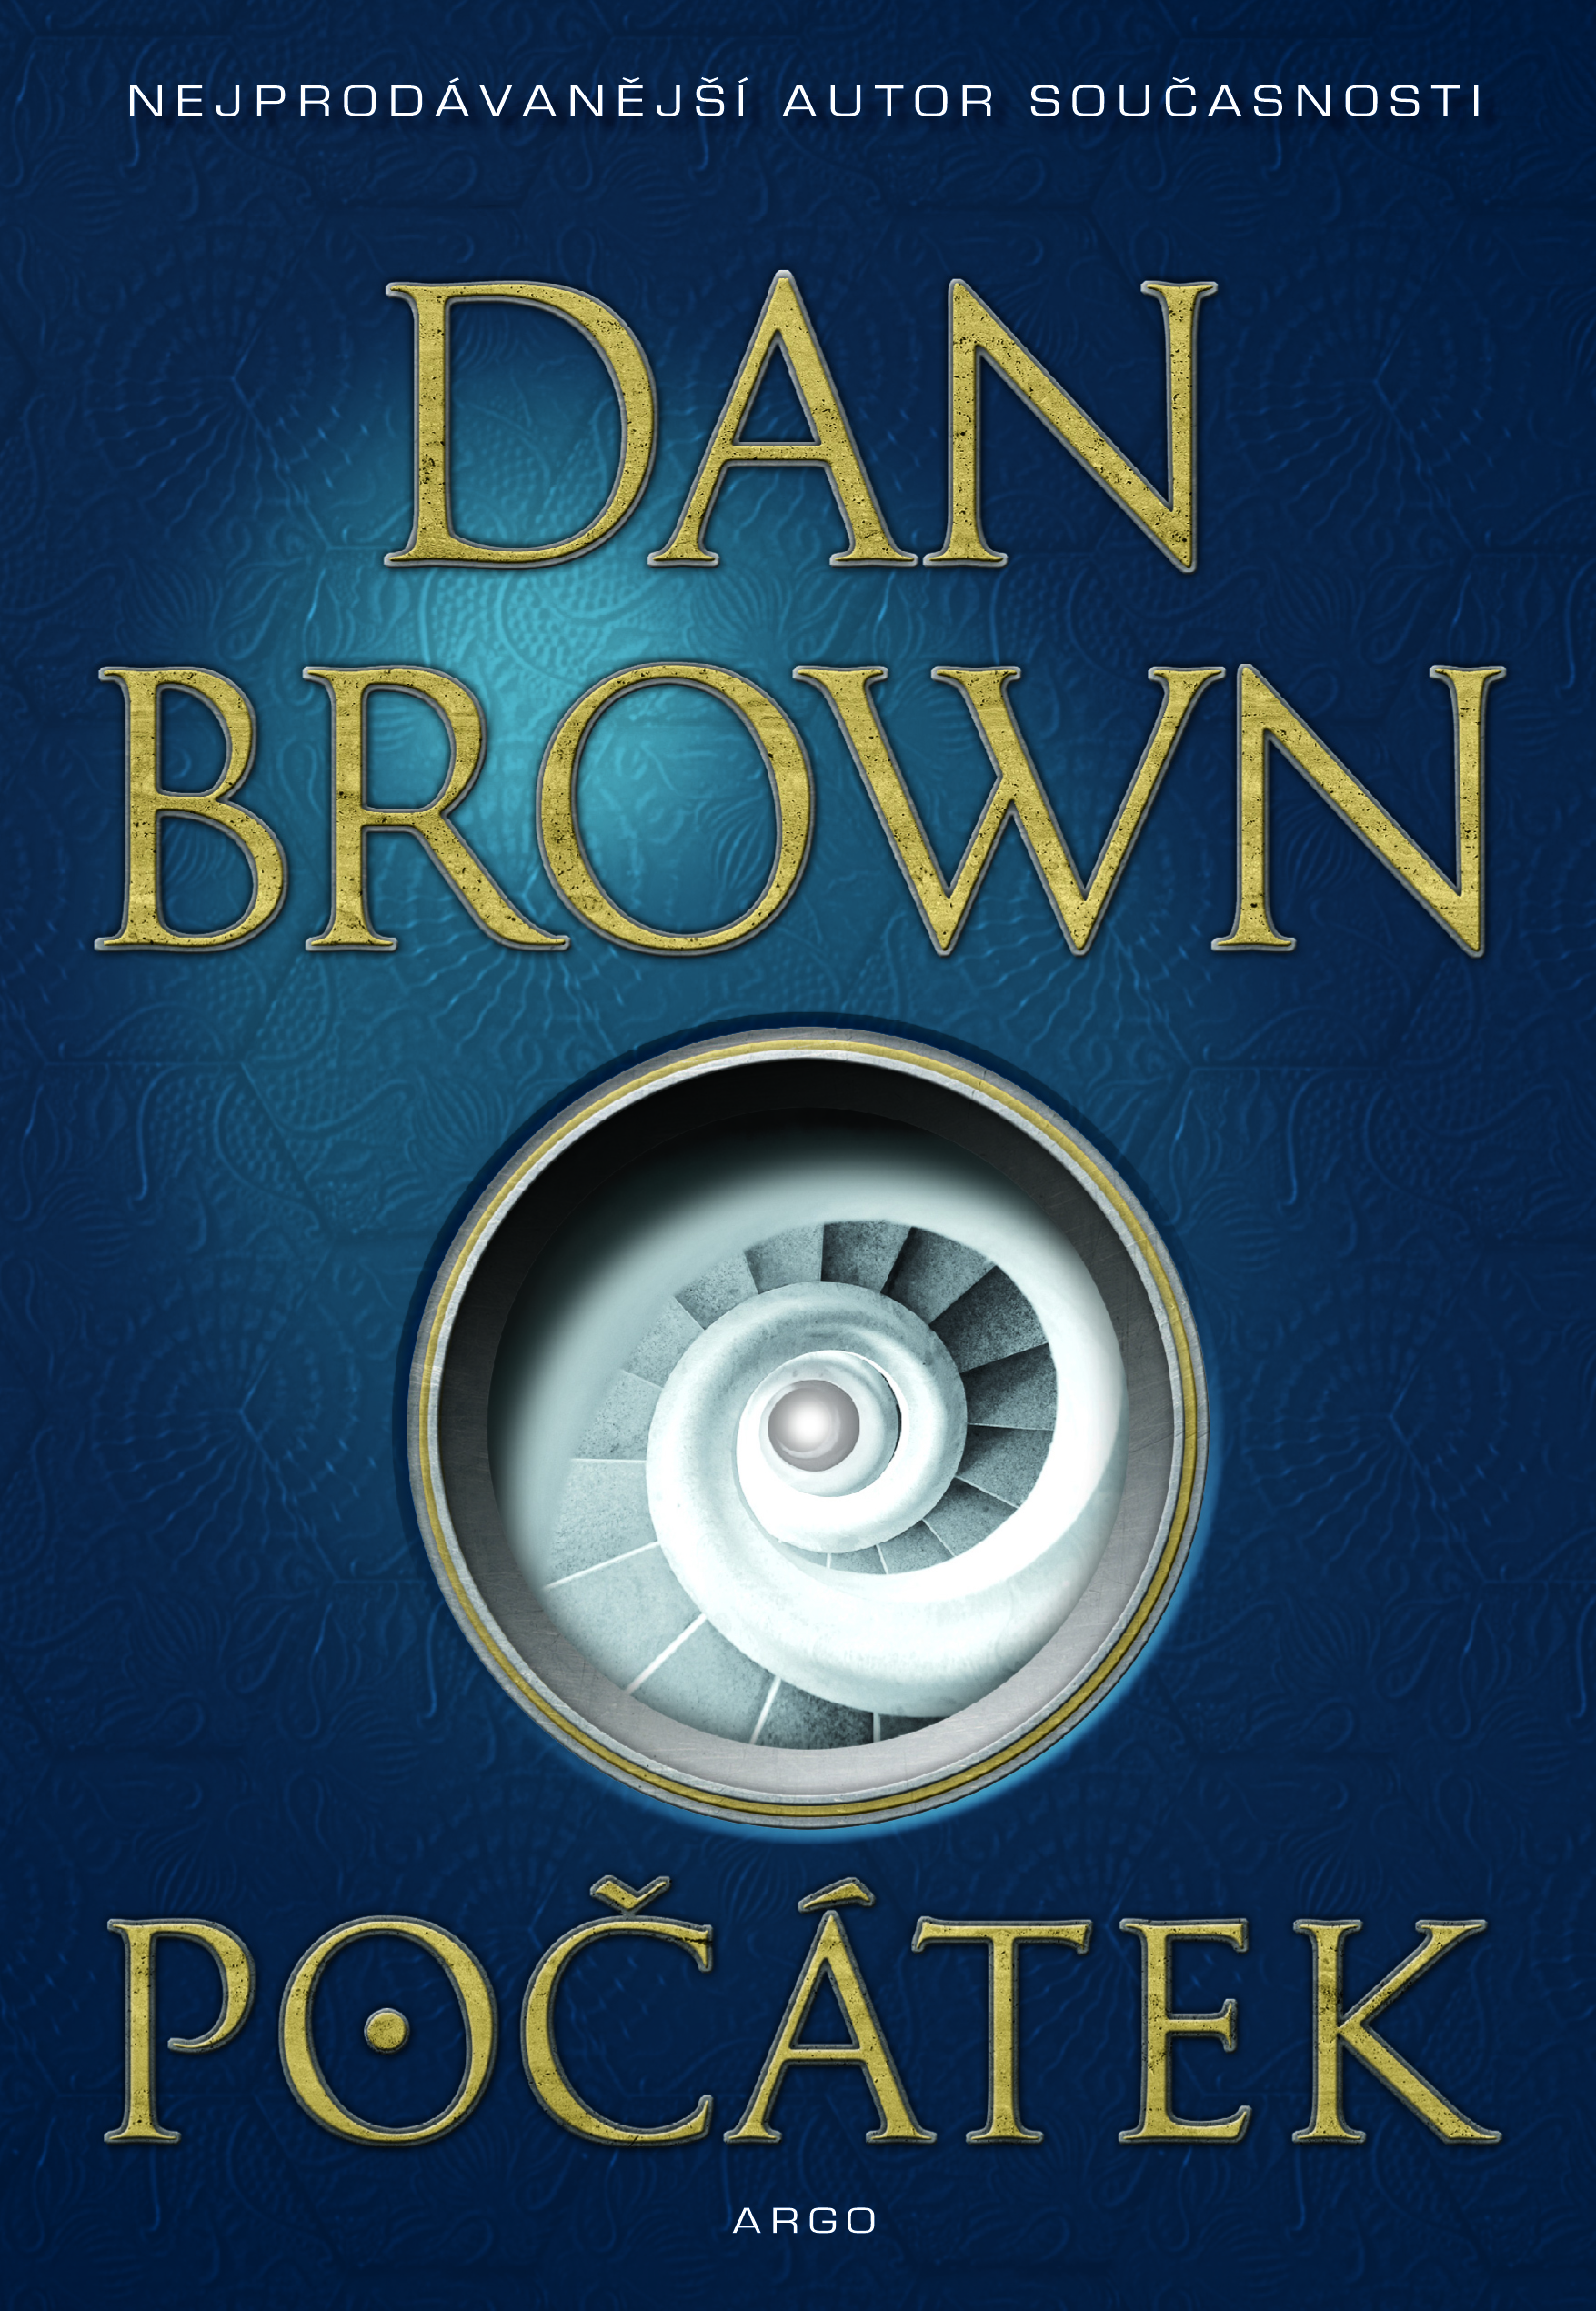 World Editions Dan Brown